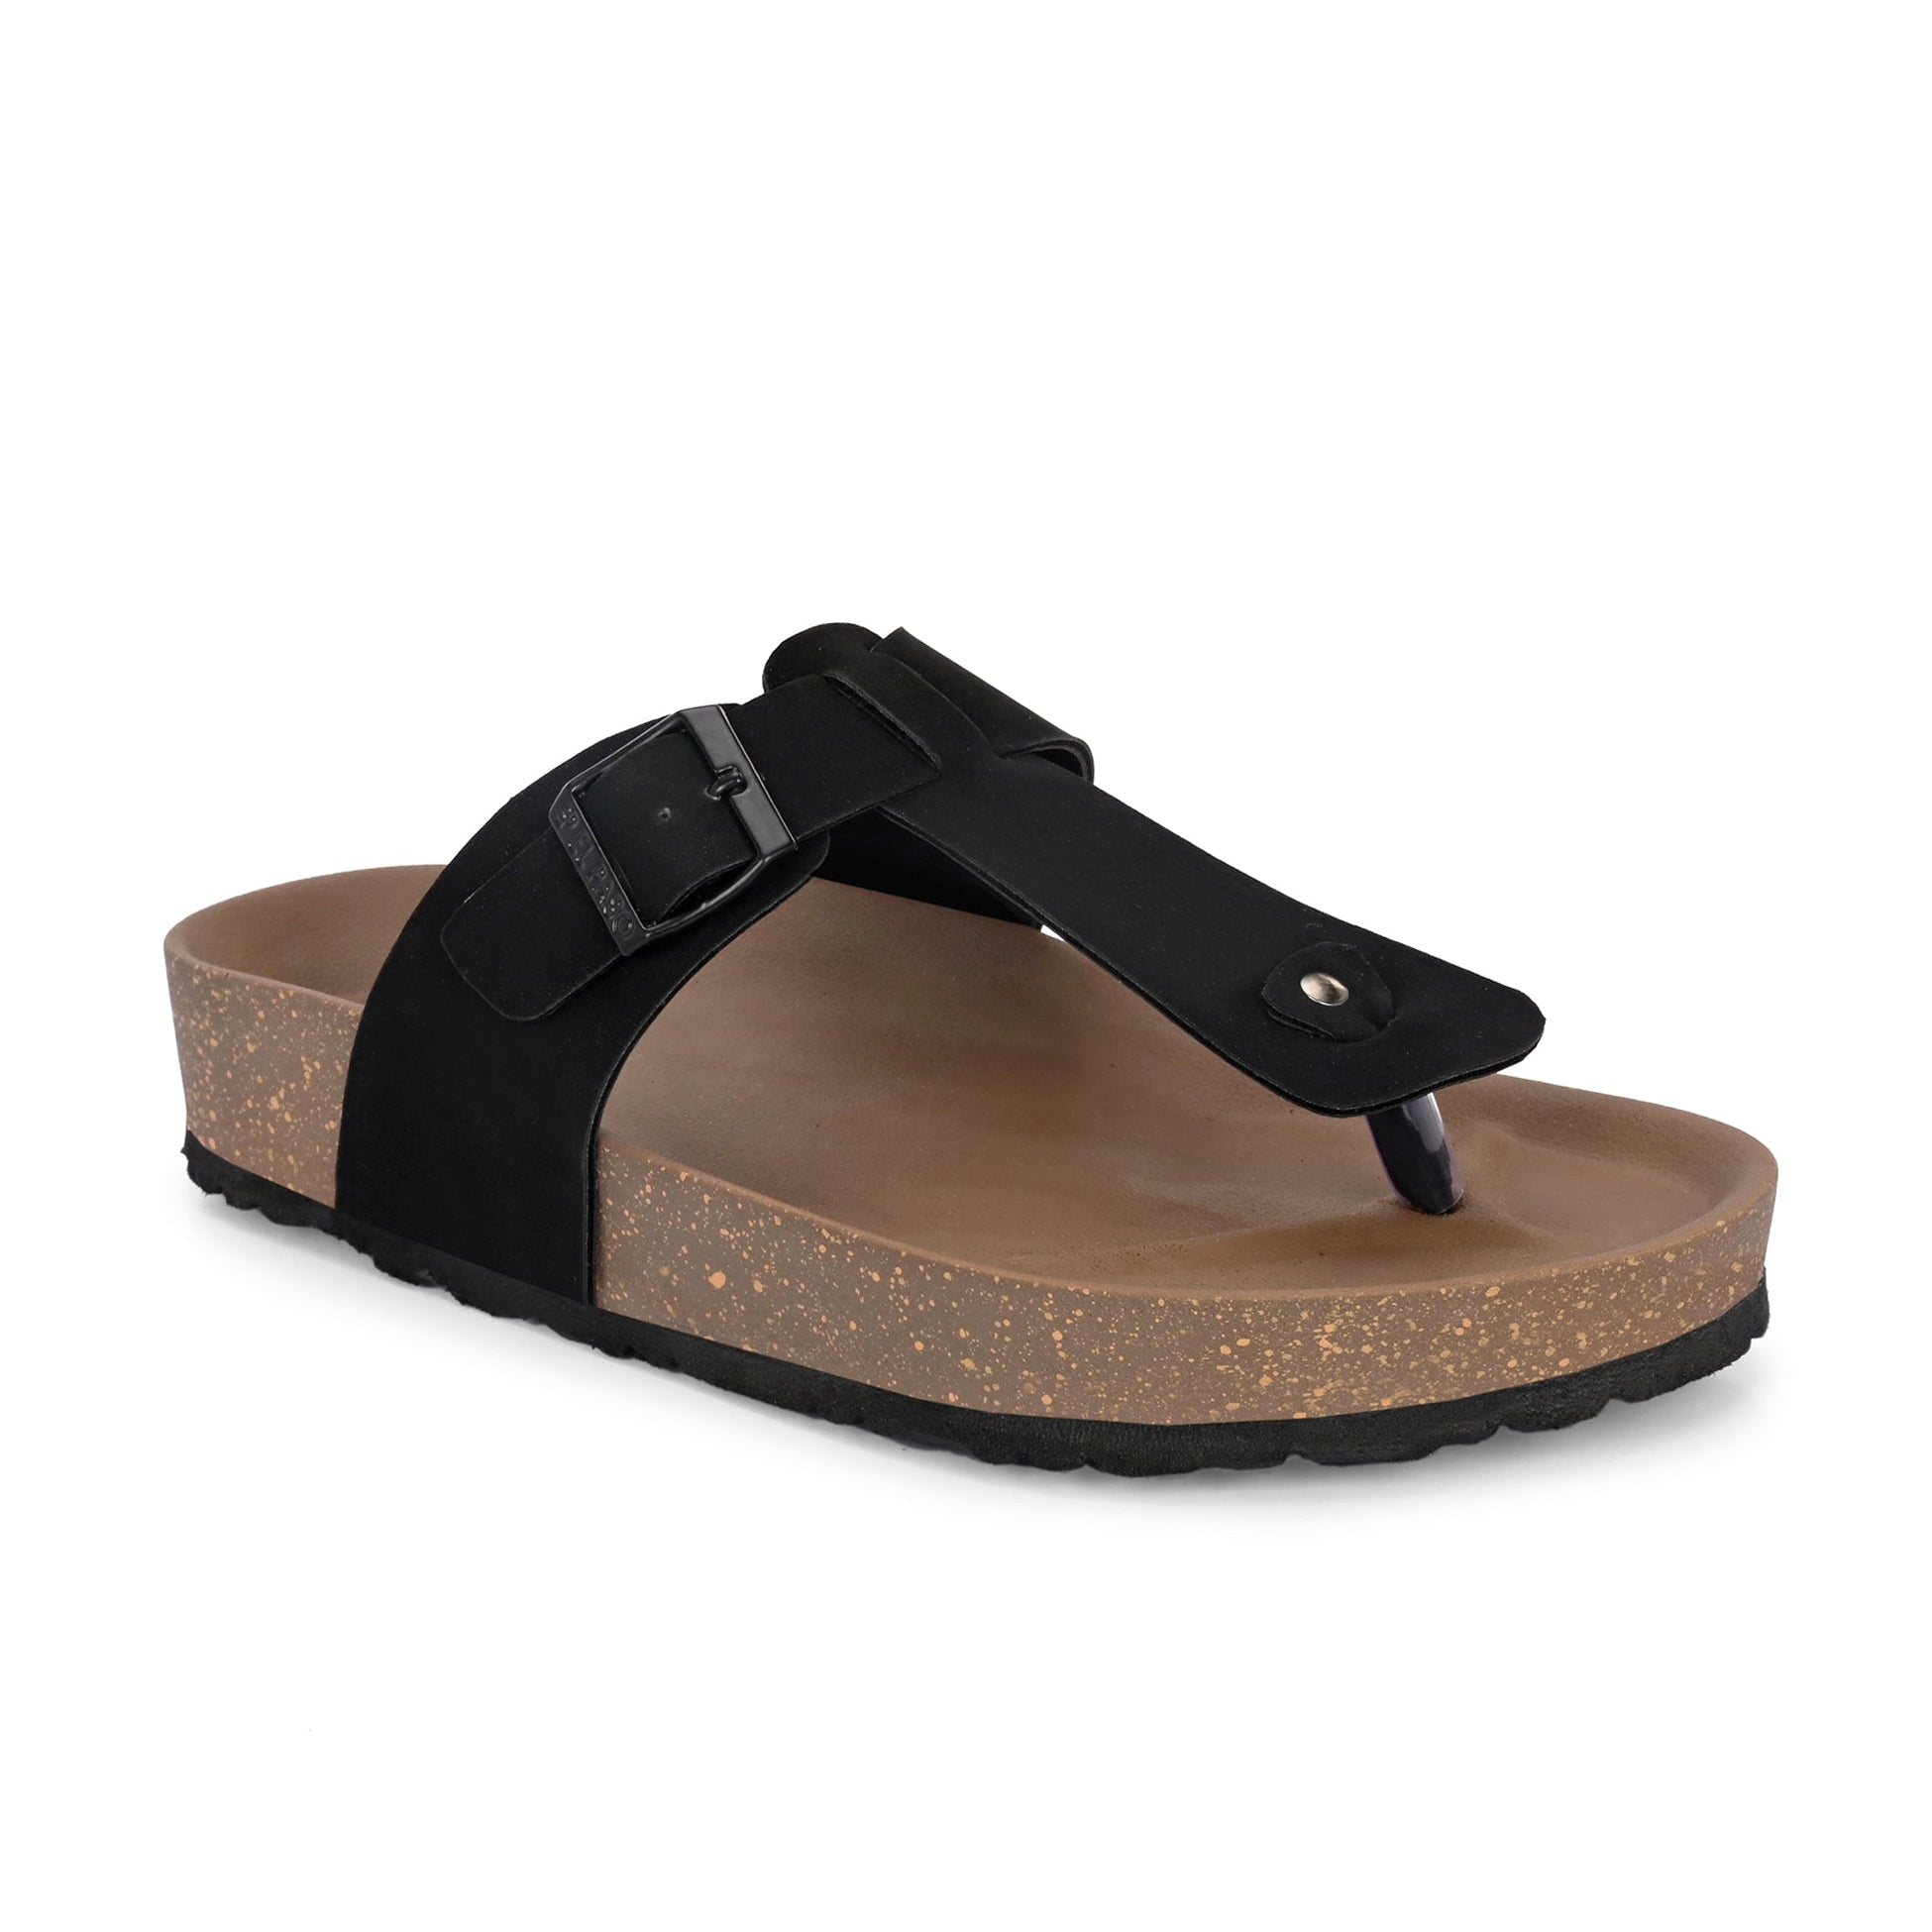 Black Men's casual slip-on closure sandal